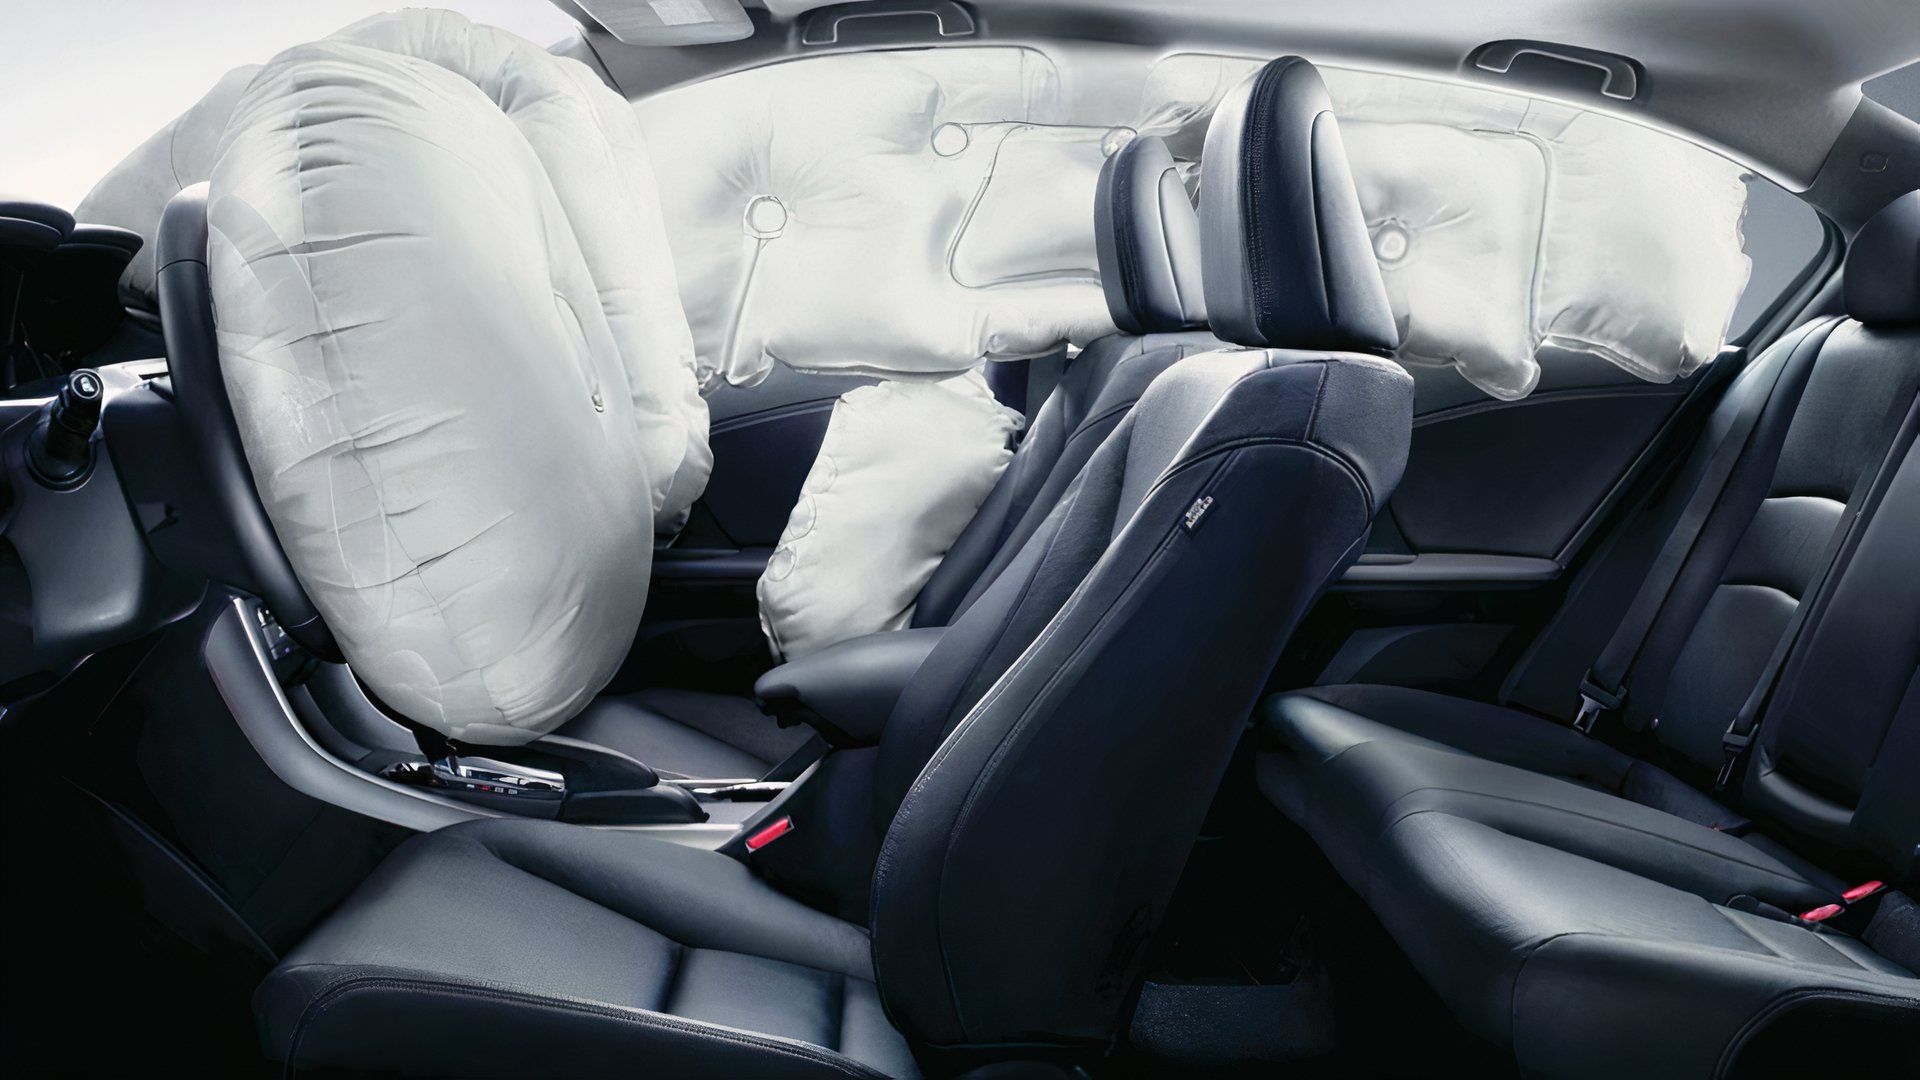 Honda Airbags System (Via Honda)